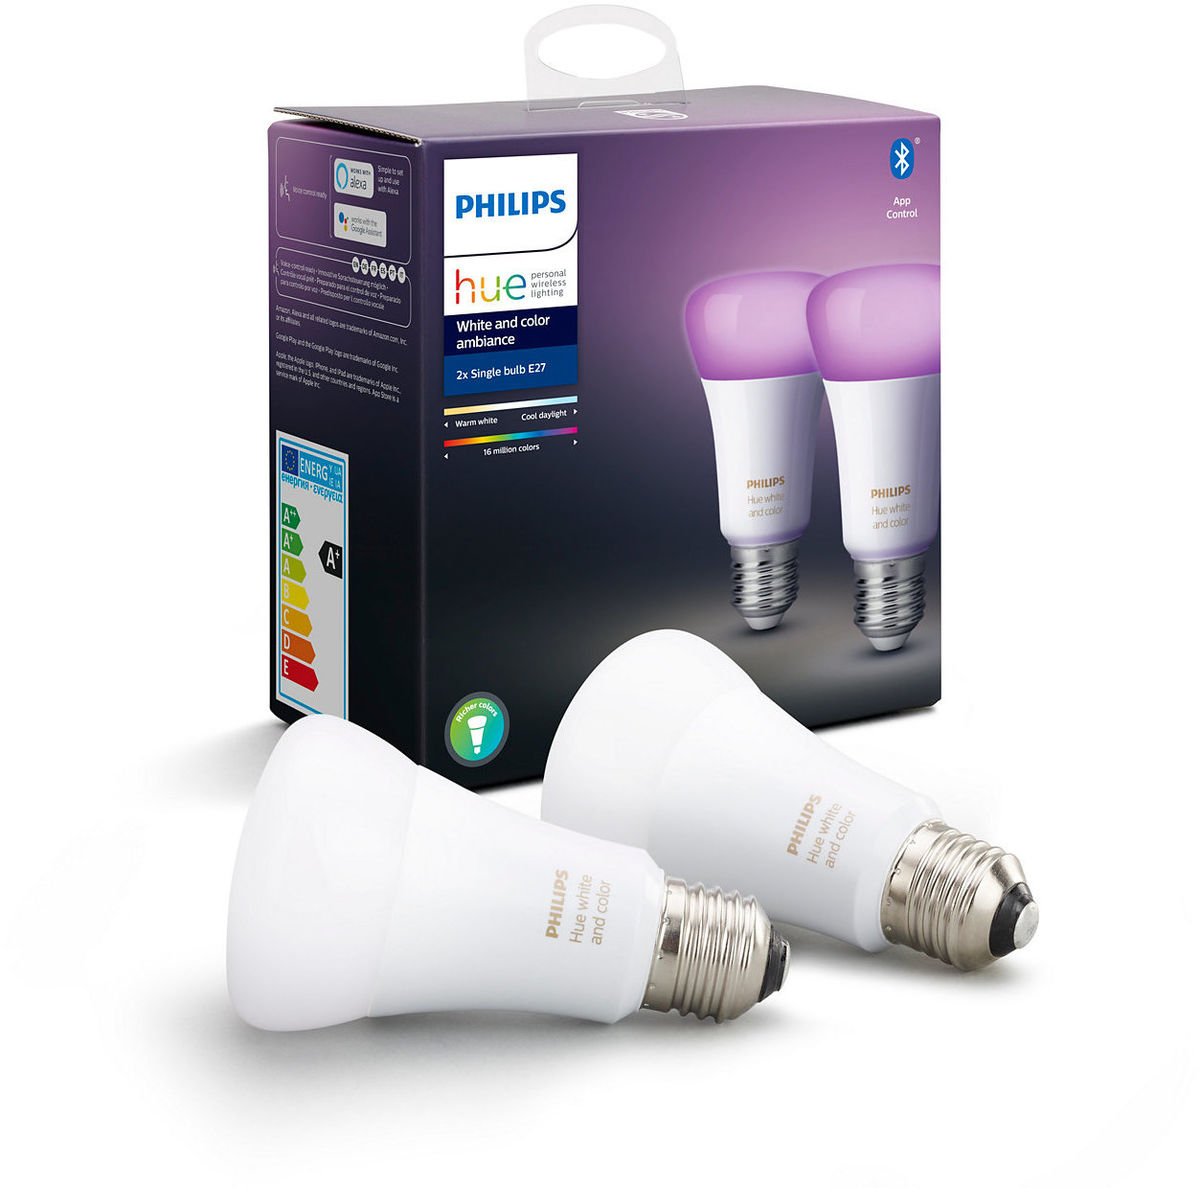 Philips Hue White & Color smart bulbs